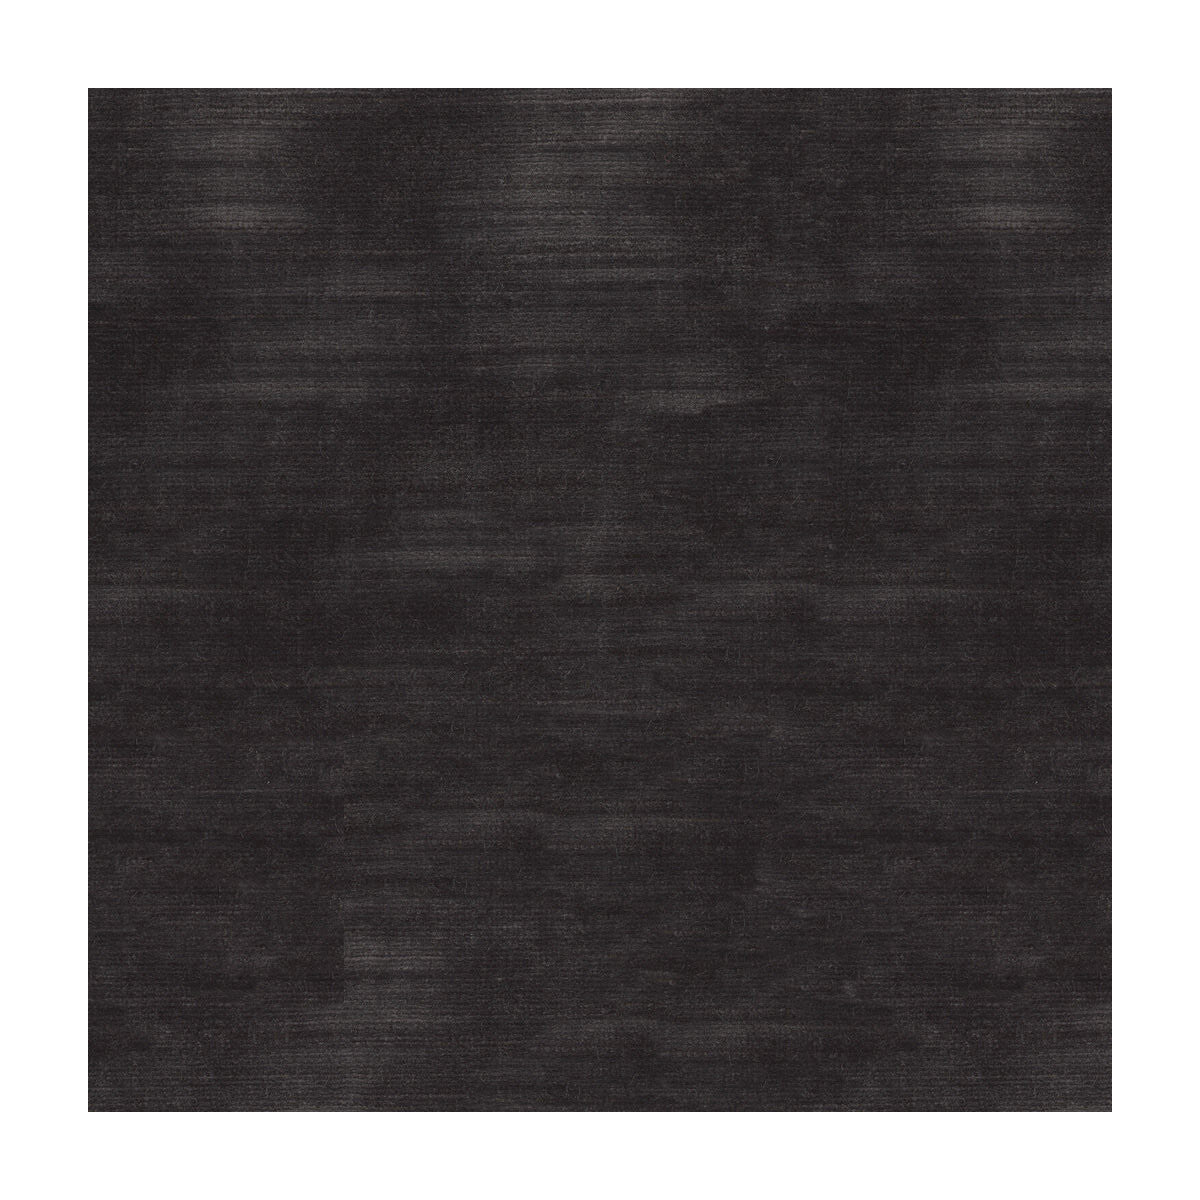 Lazare Velvet fabric in smoke color - pattern 8016103.1011.0 - by Brunschwig &amp; Fils